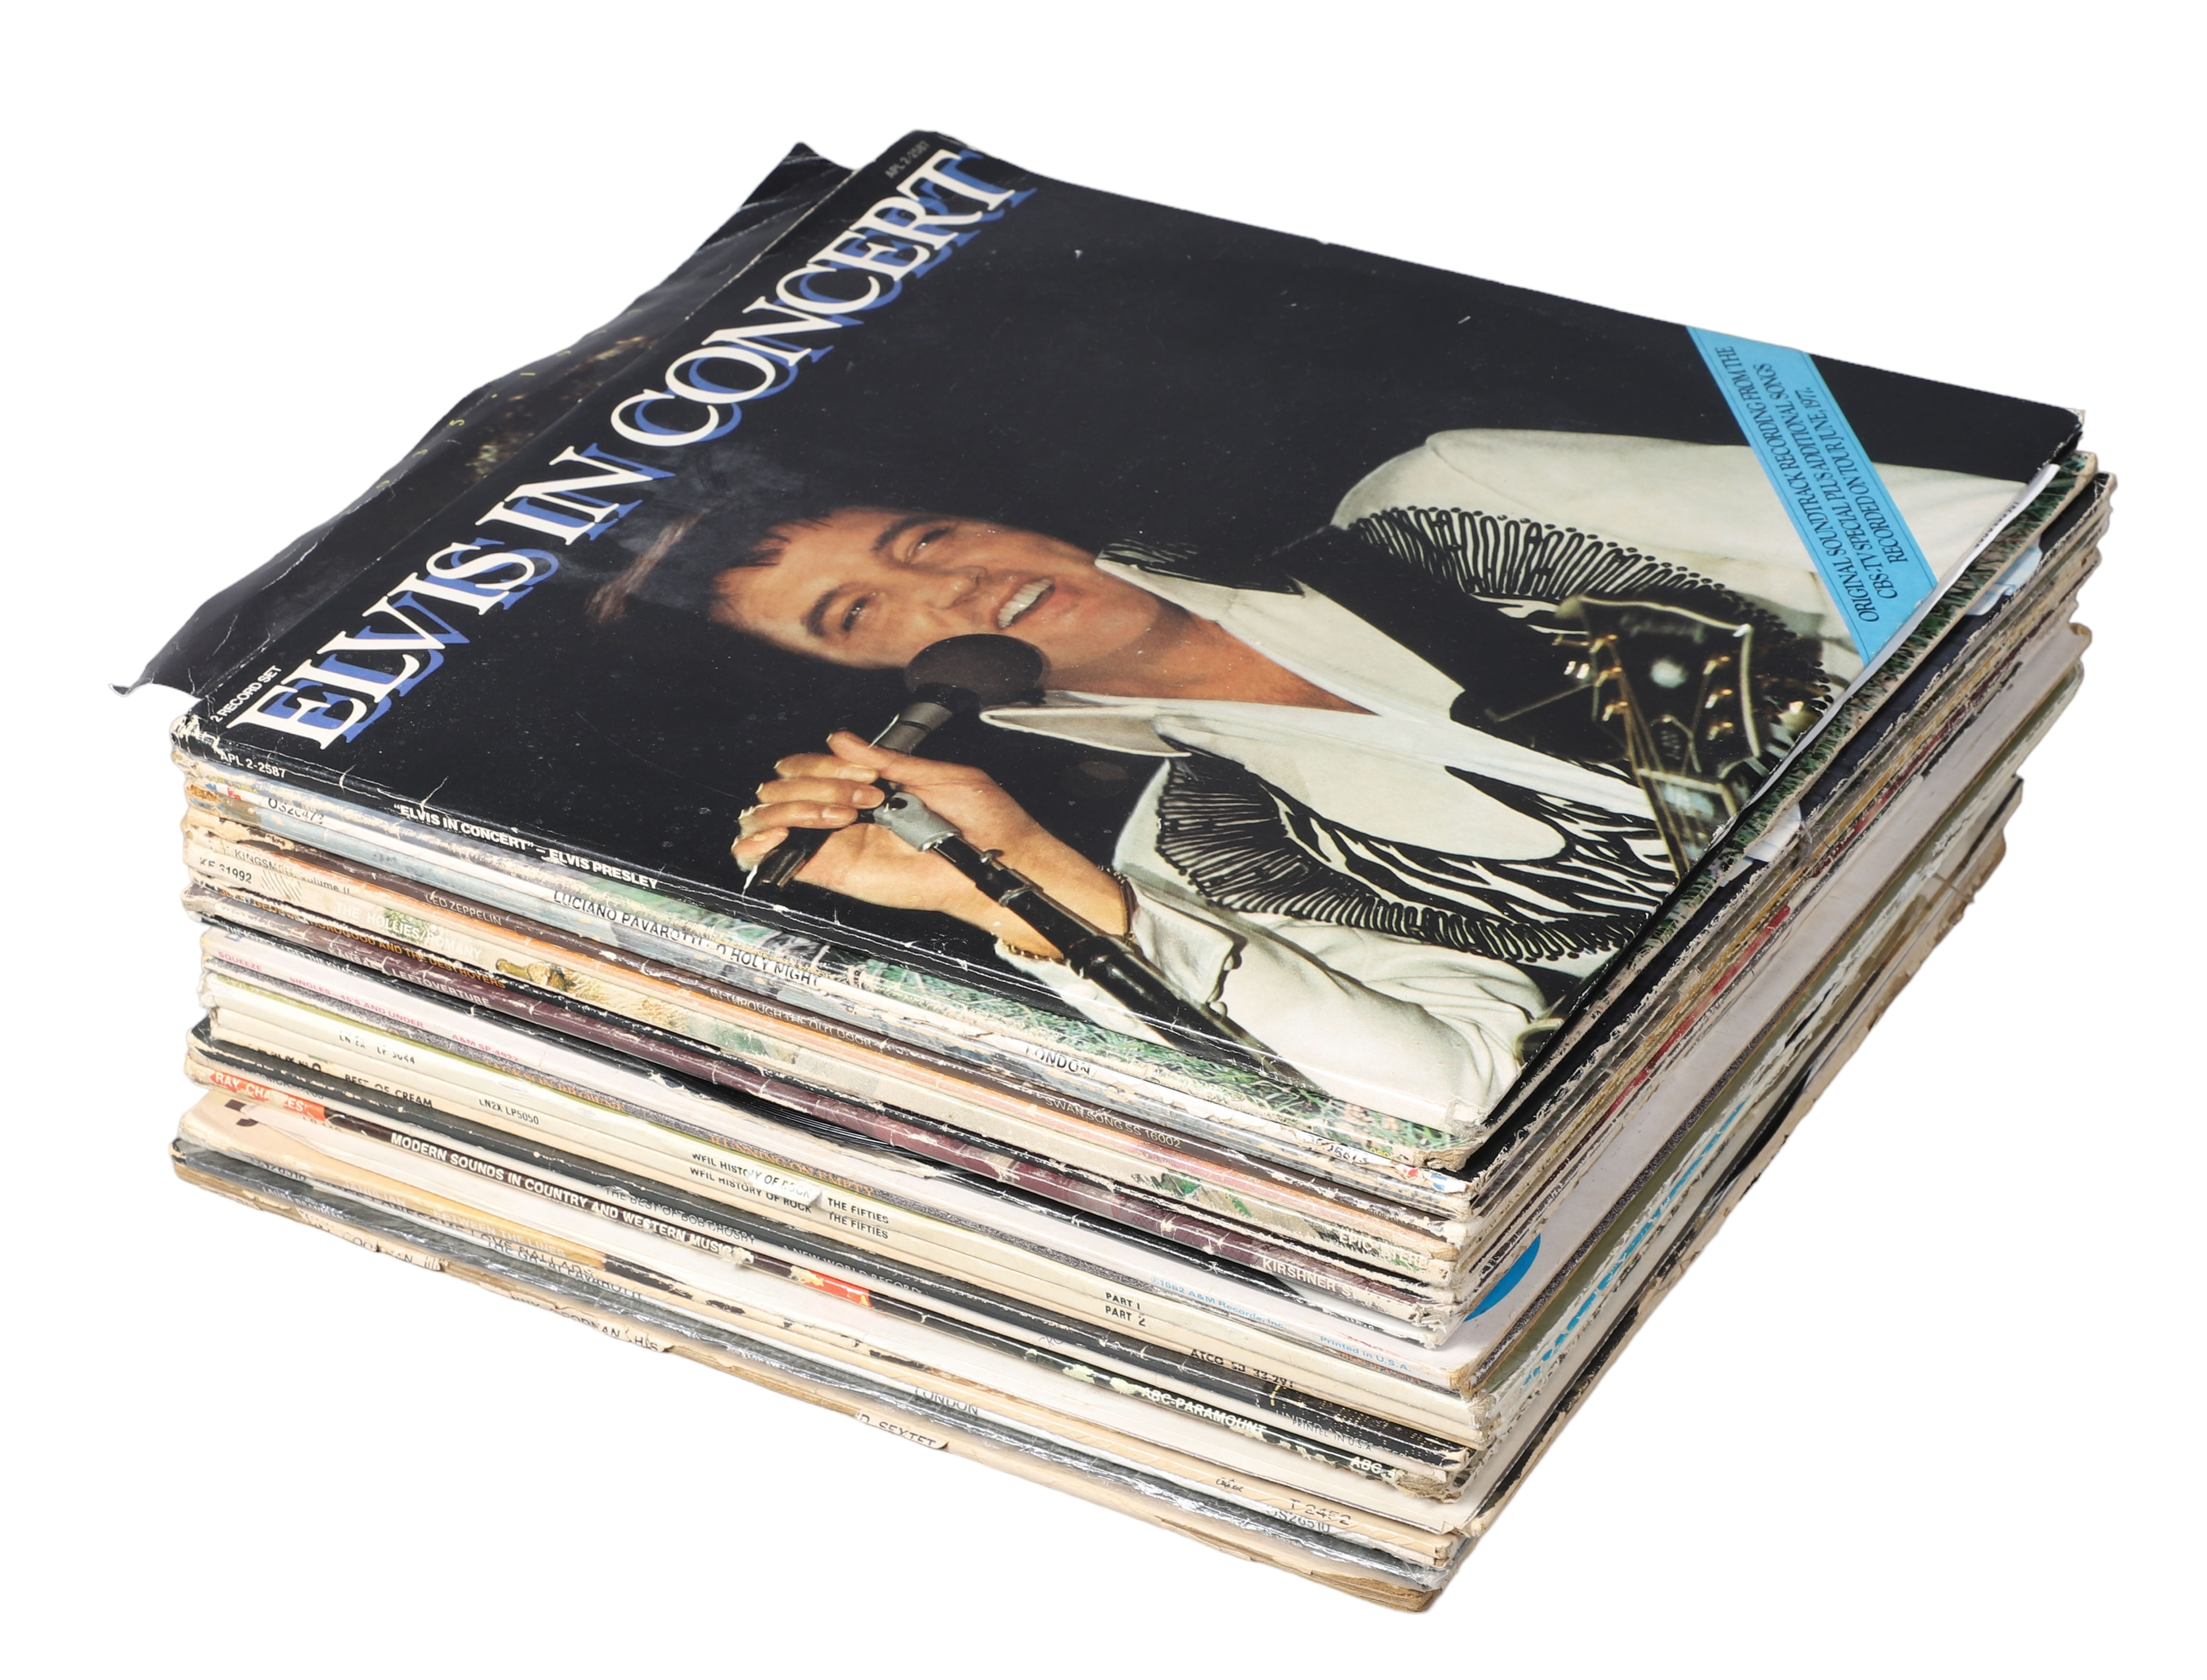 (25+) Vinyl LP record albums, including